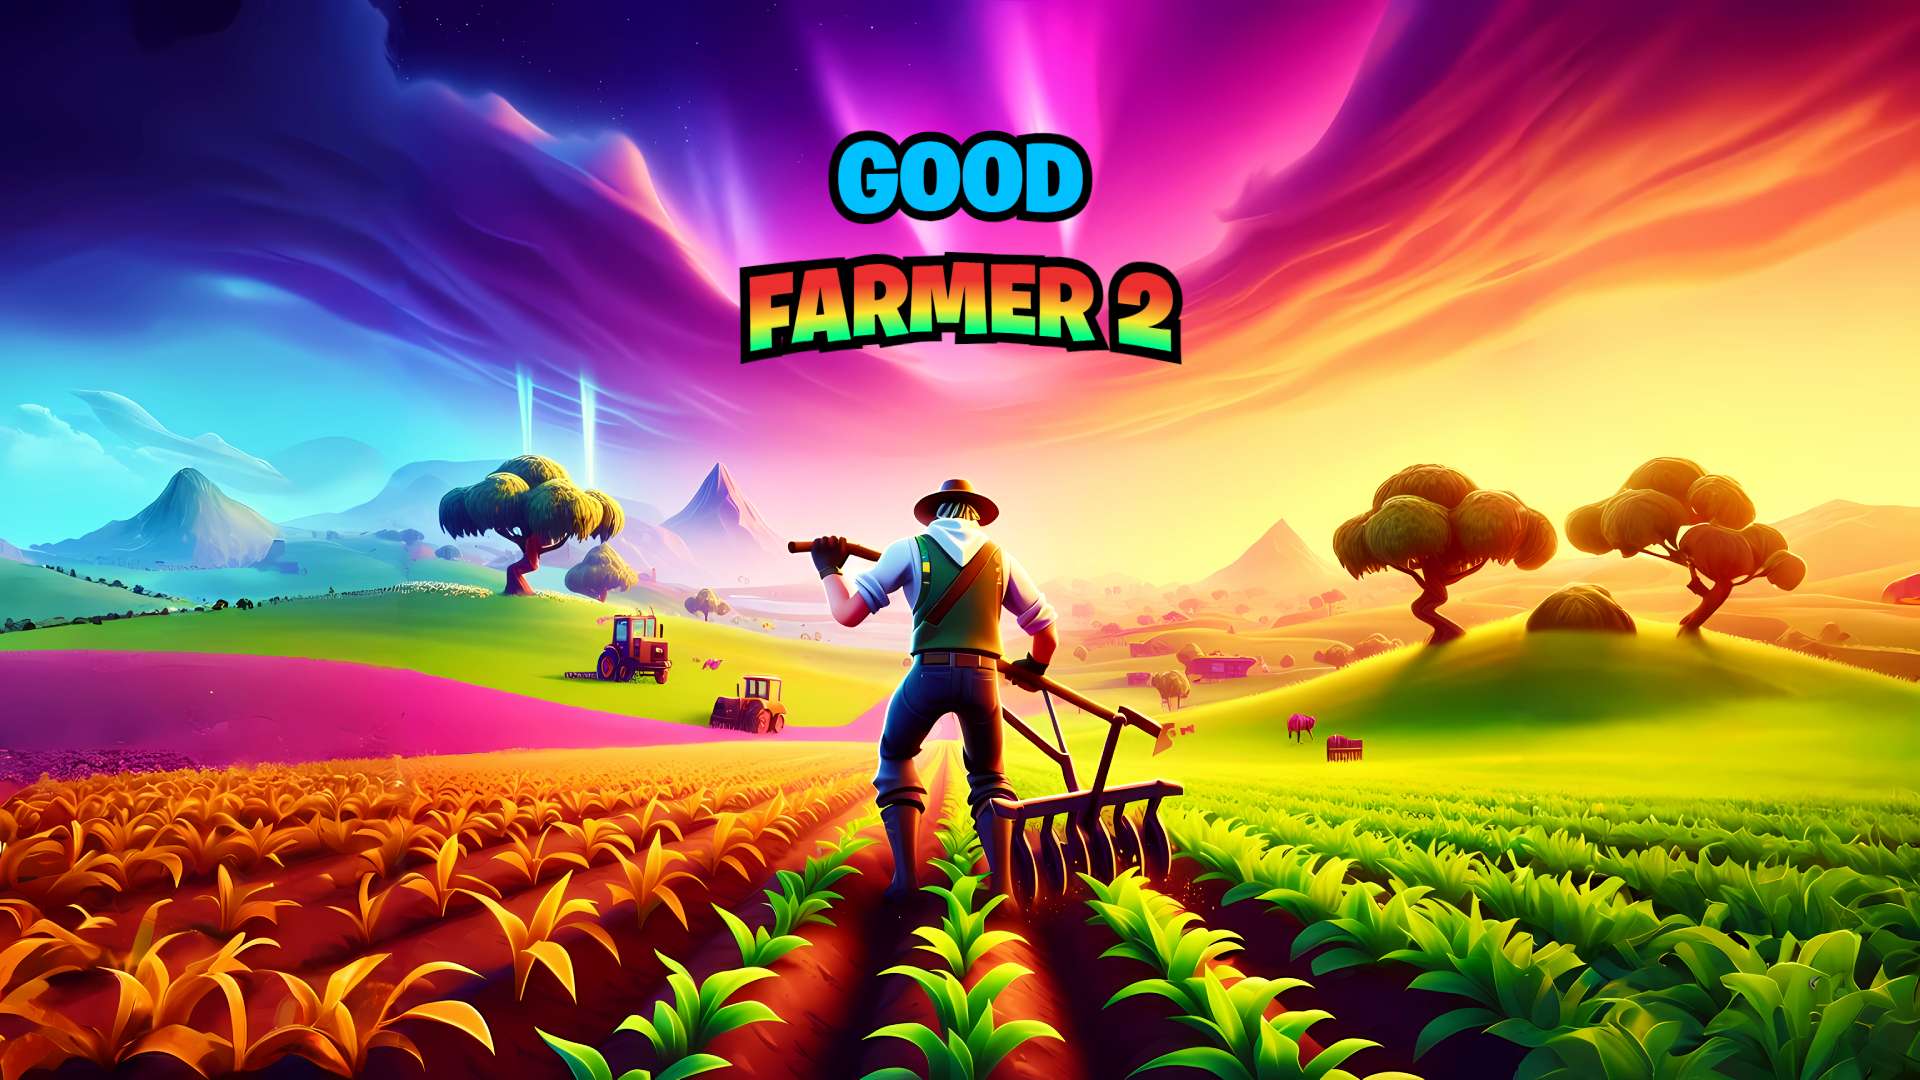 GOOD FARMER 2